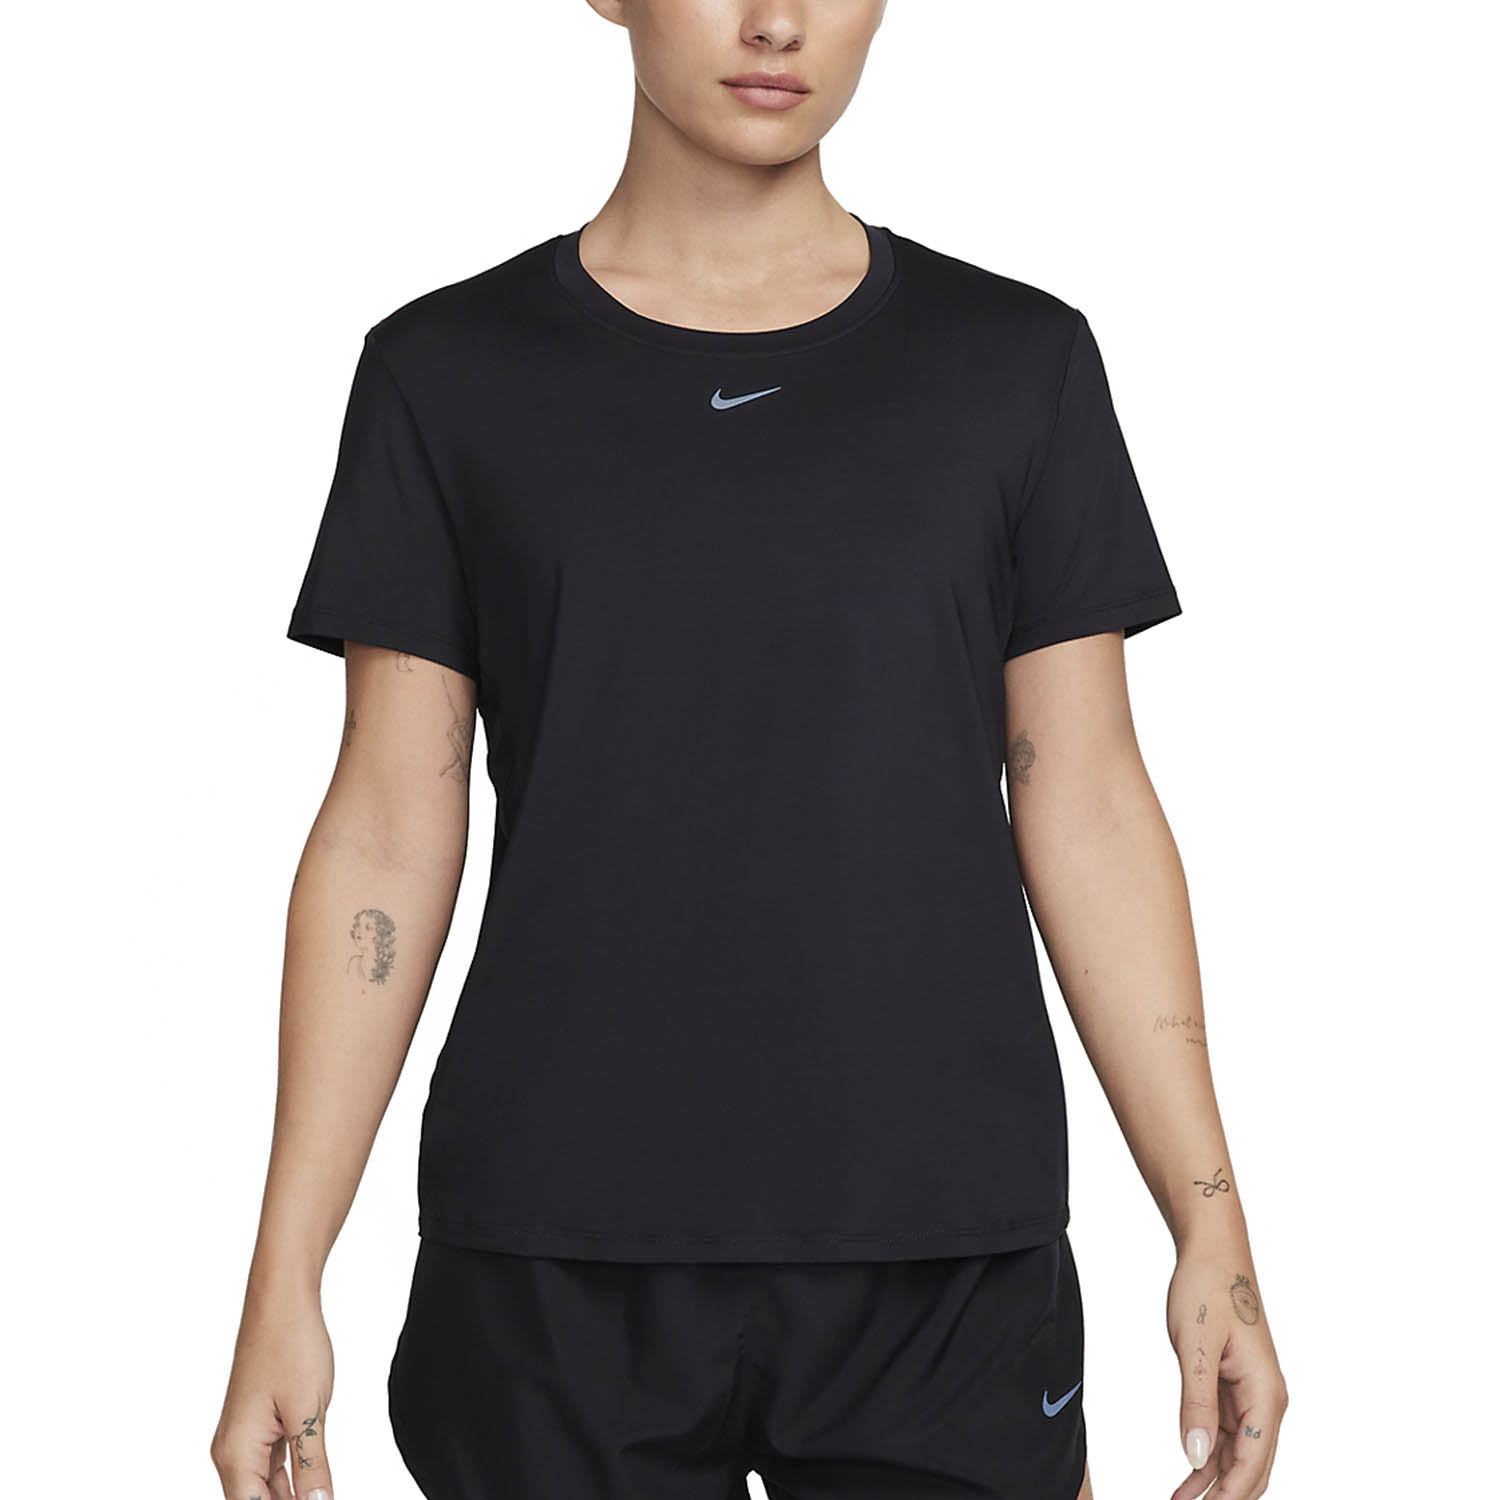 Nike One Classic Women's Tennis T-Shirt - Black